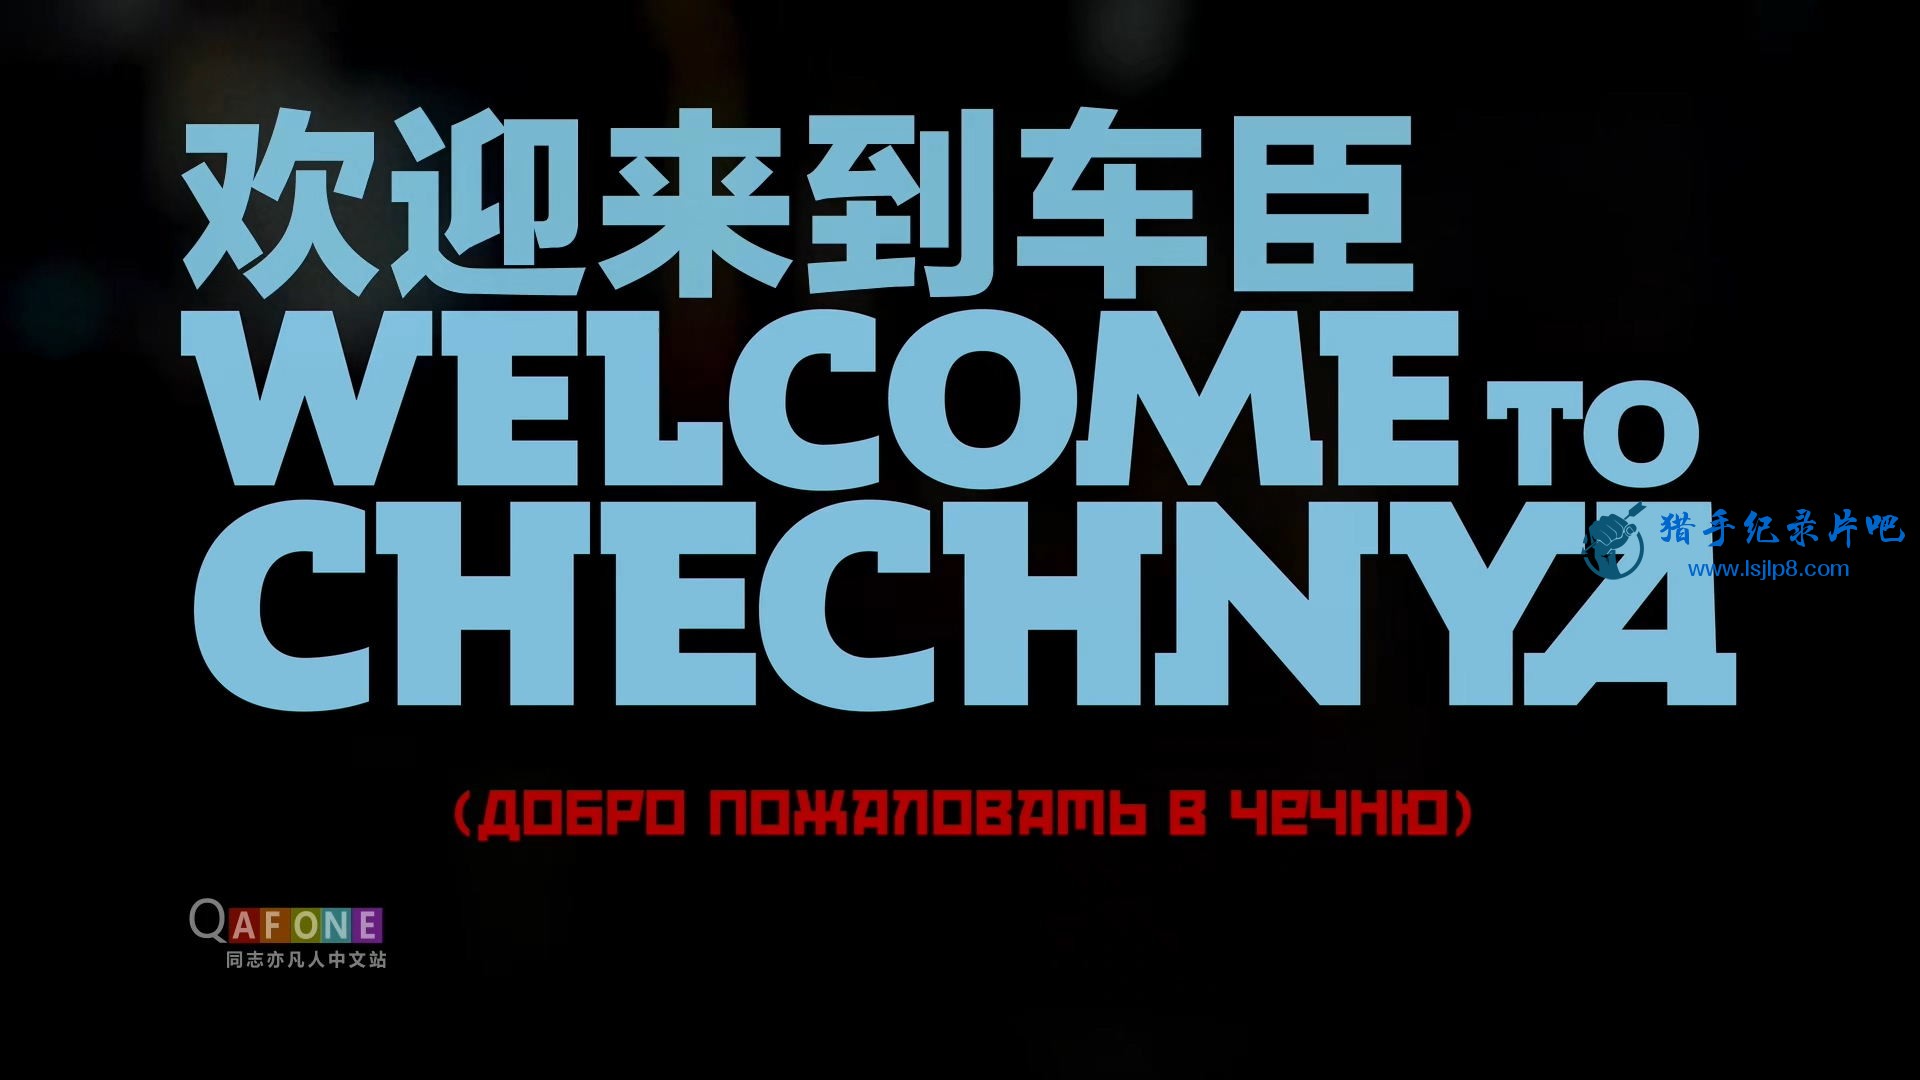 Welcome.to.Chechnya.2020.1080p.mkv_20200918_111307.168_ͼ.jpg